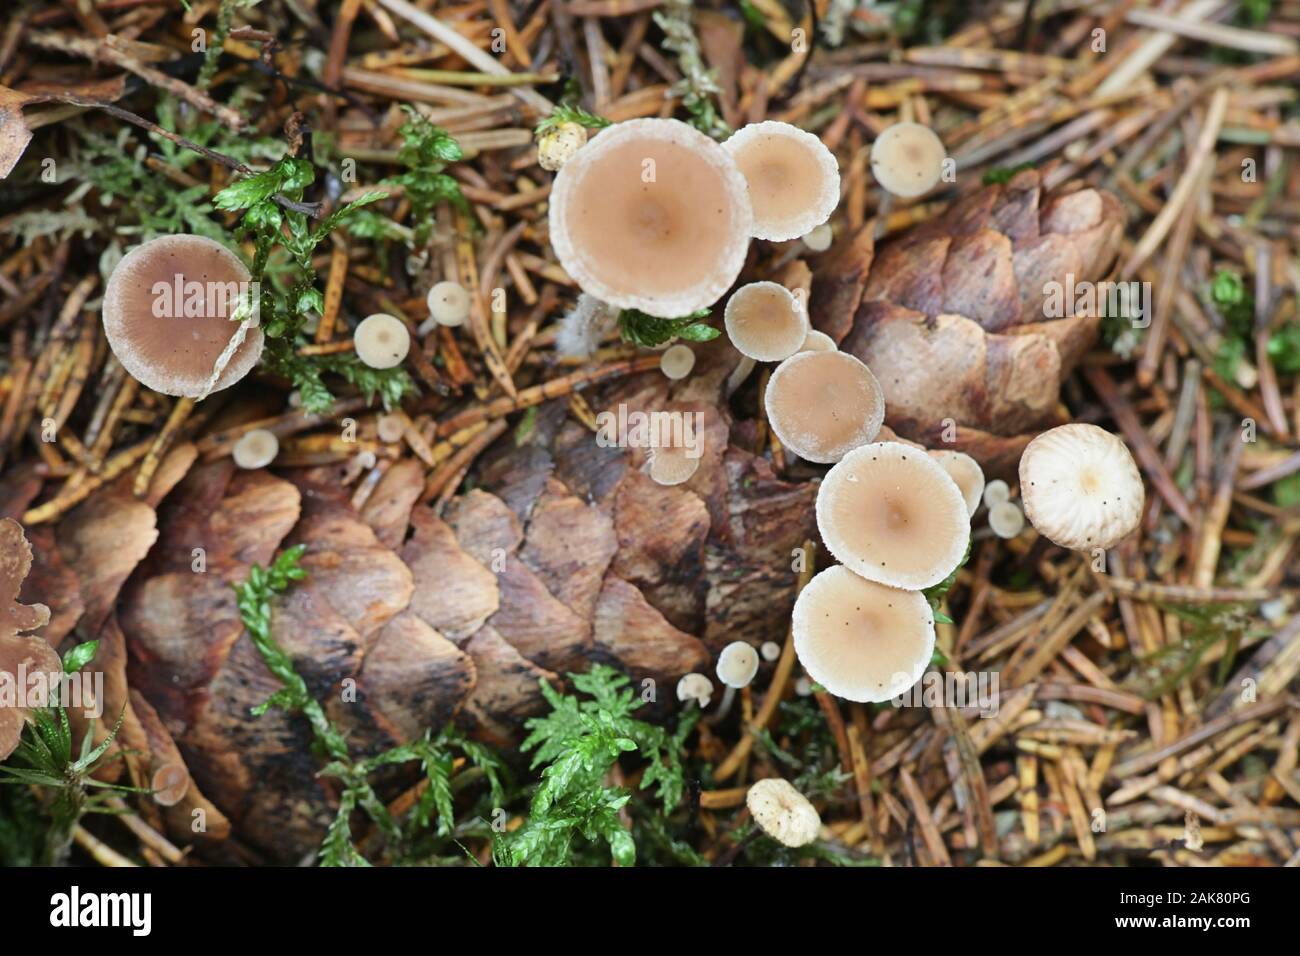 Baeospora myosura, known as conifercone cap or cone mushroom, wild mushrooms from Finland Stock Photo